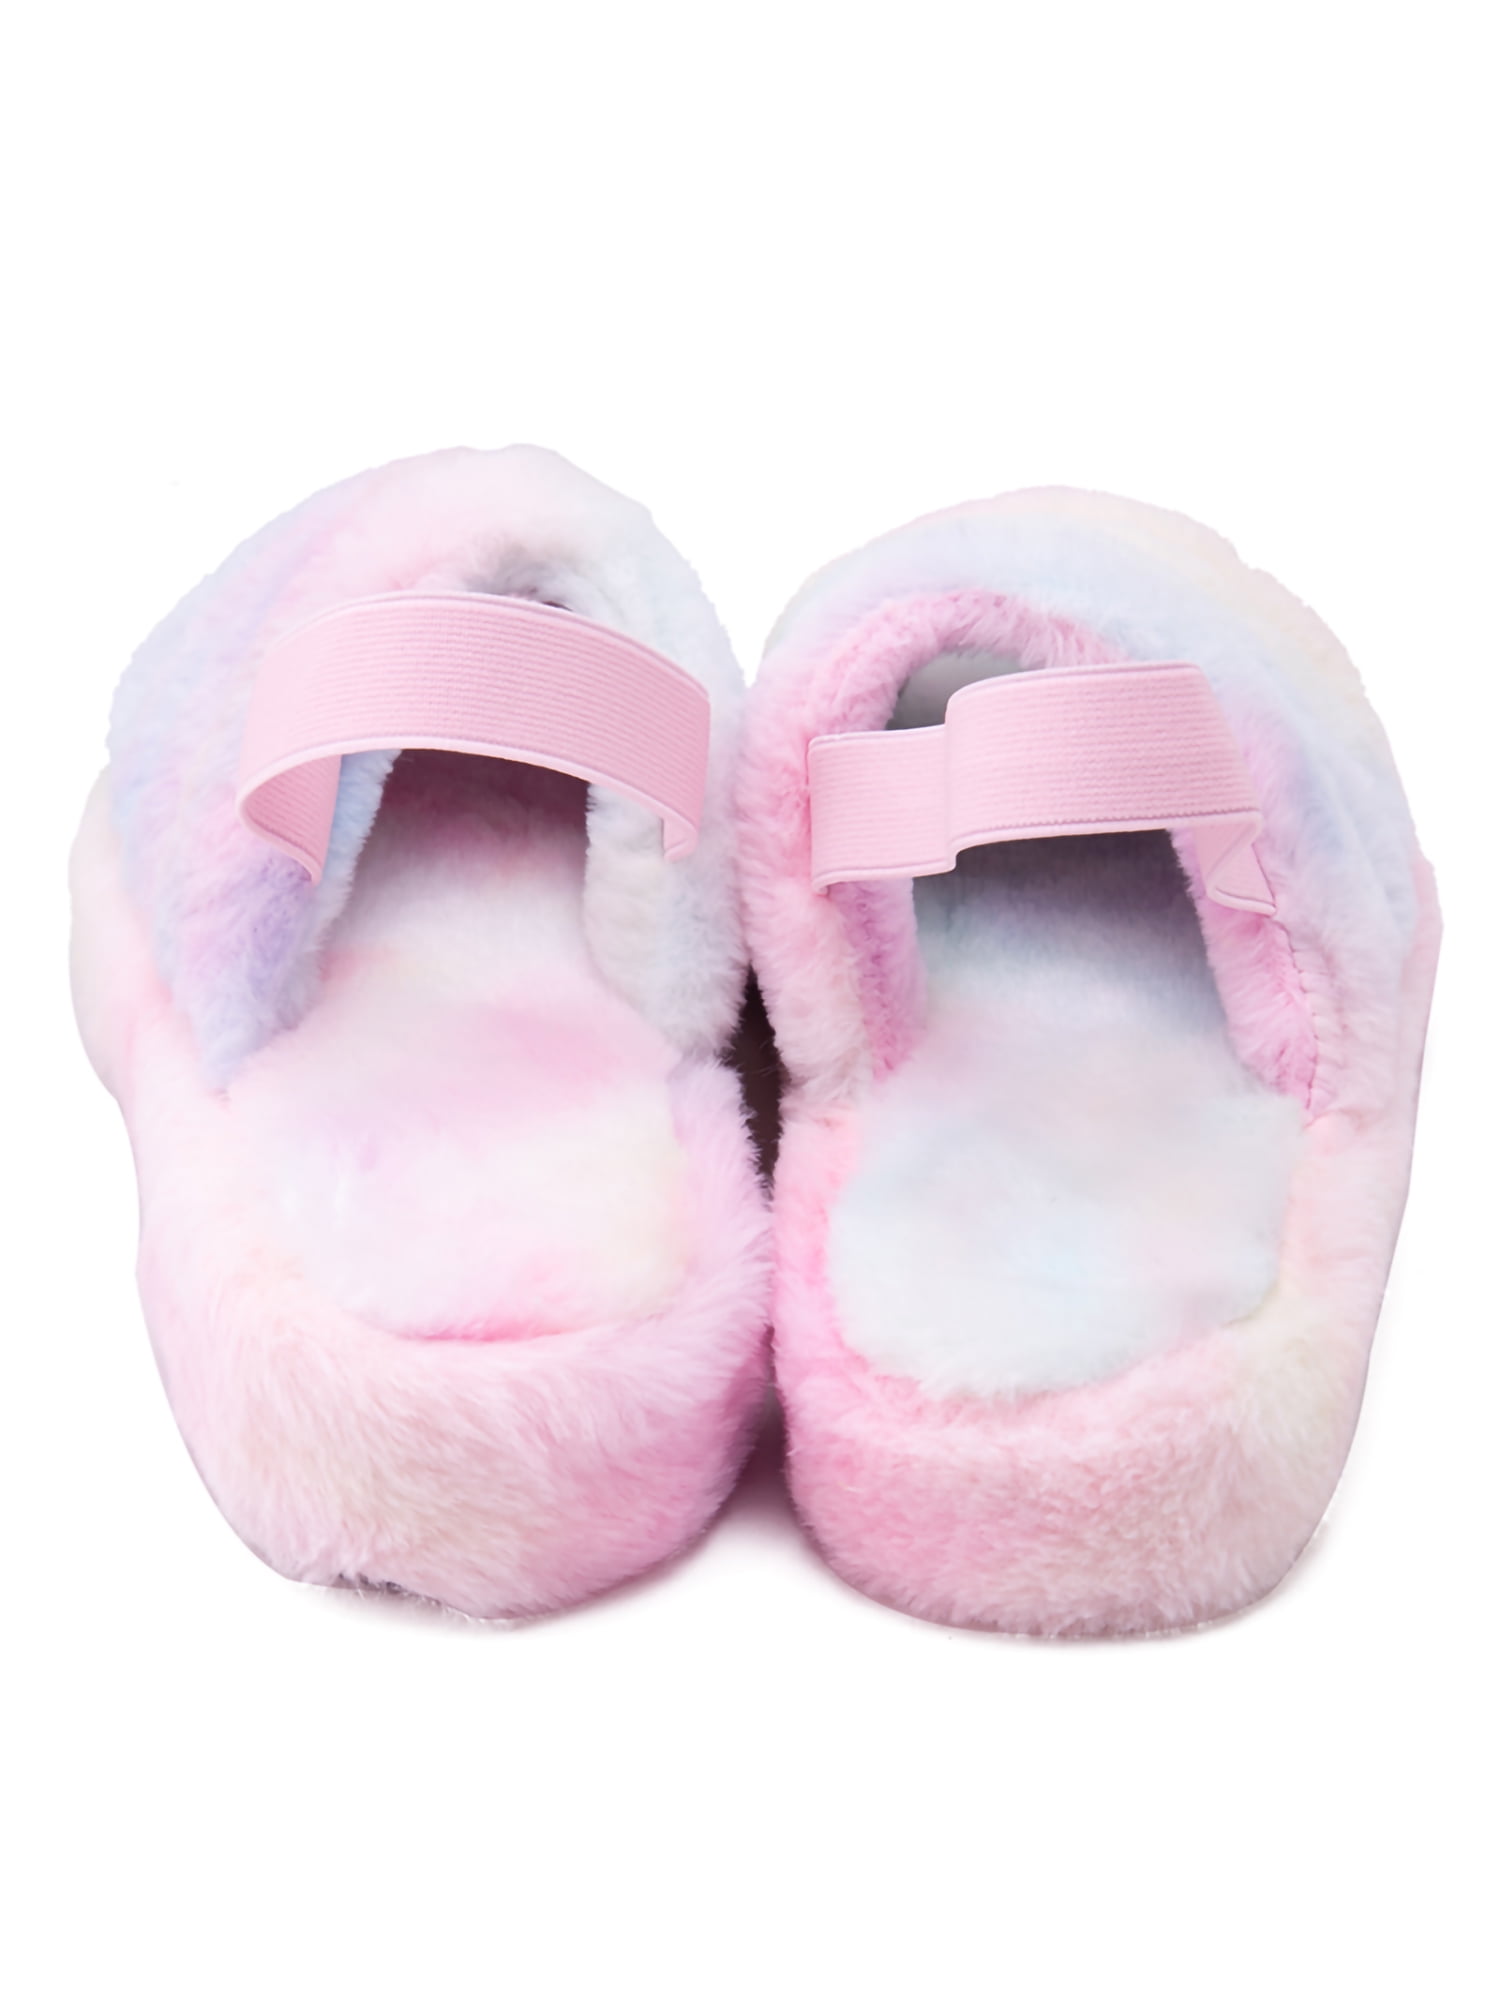 winter slippers walmart